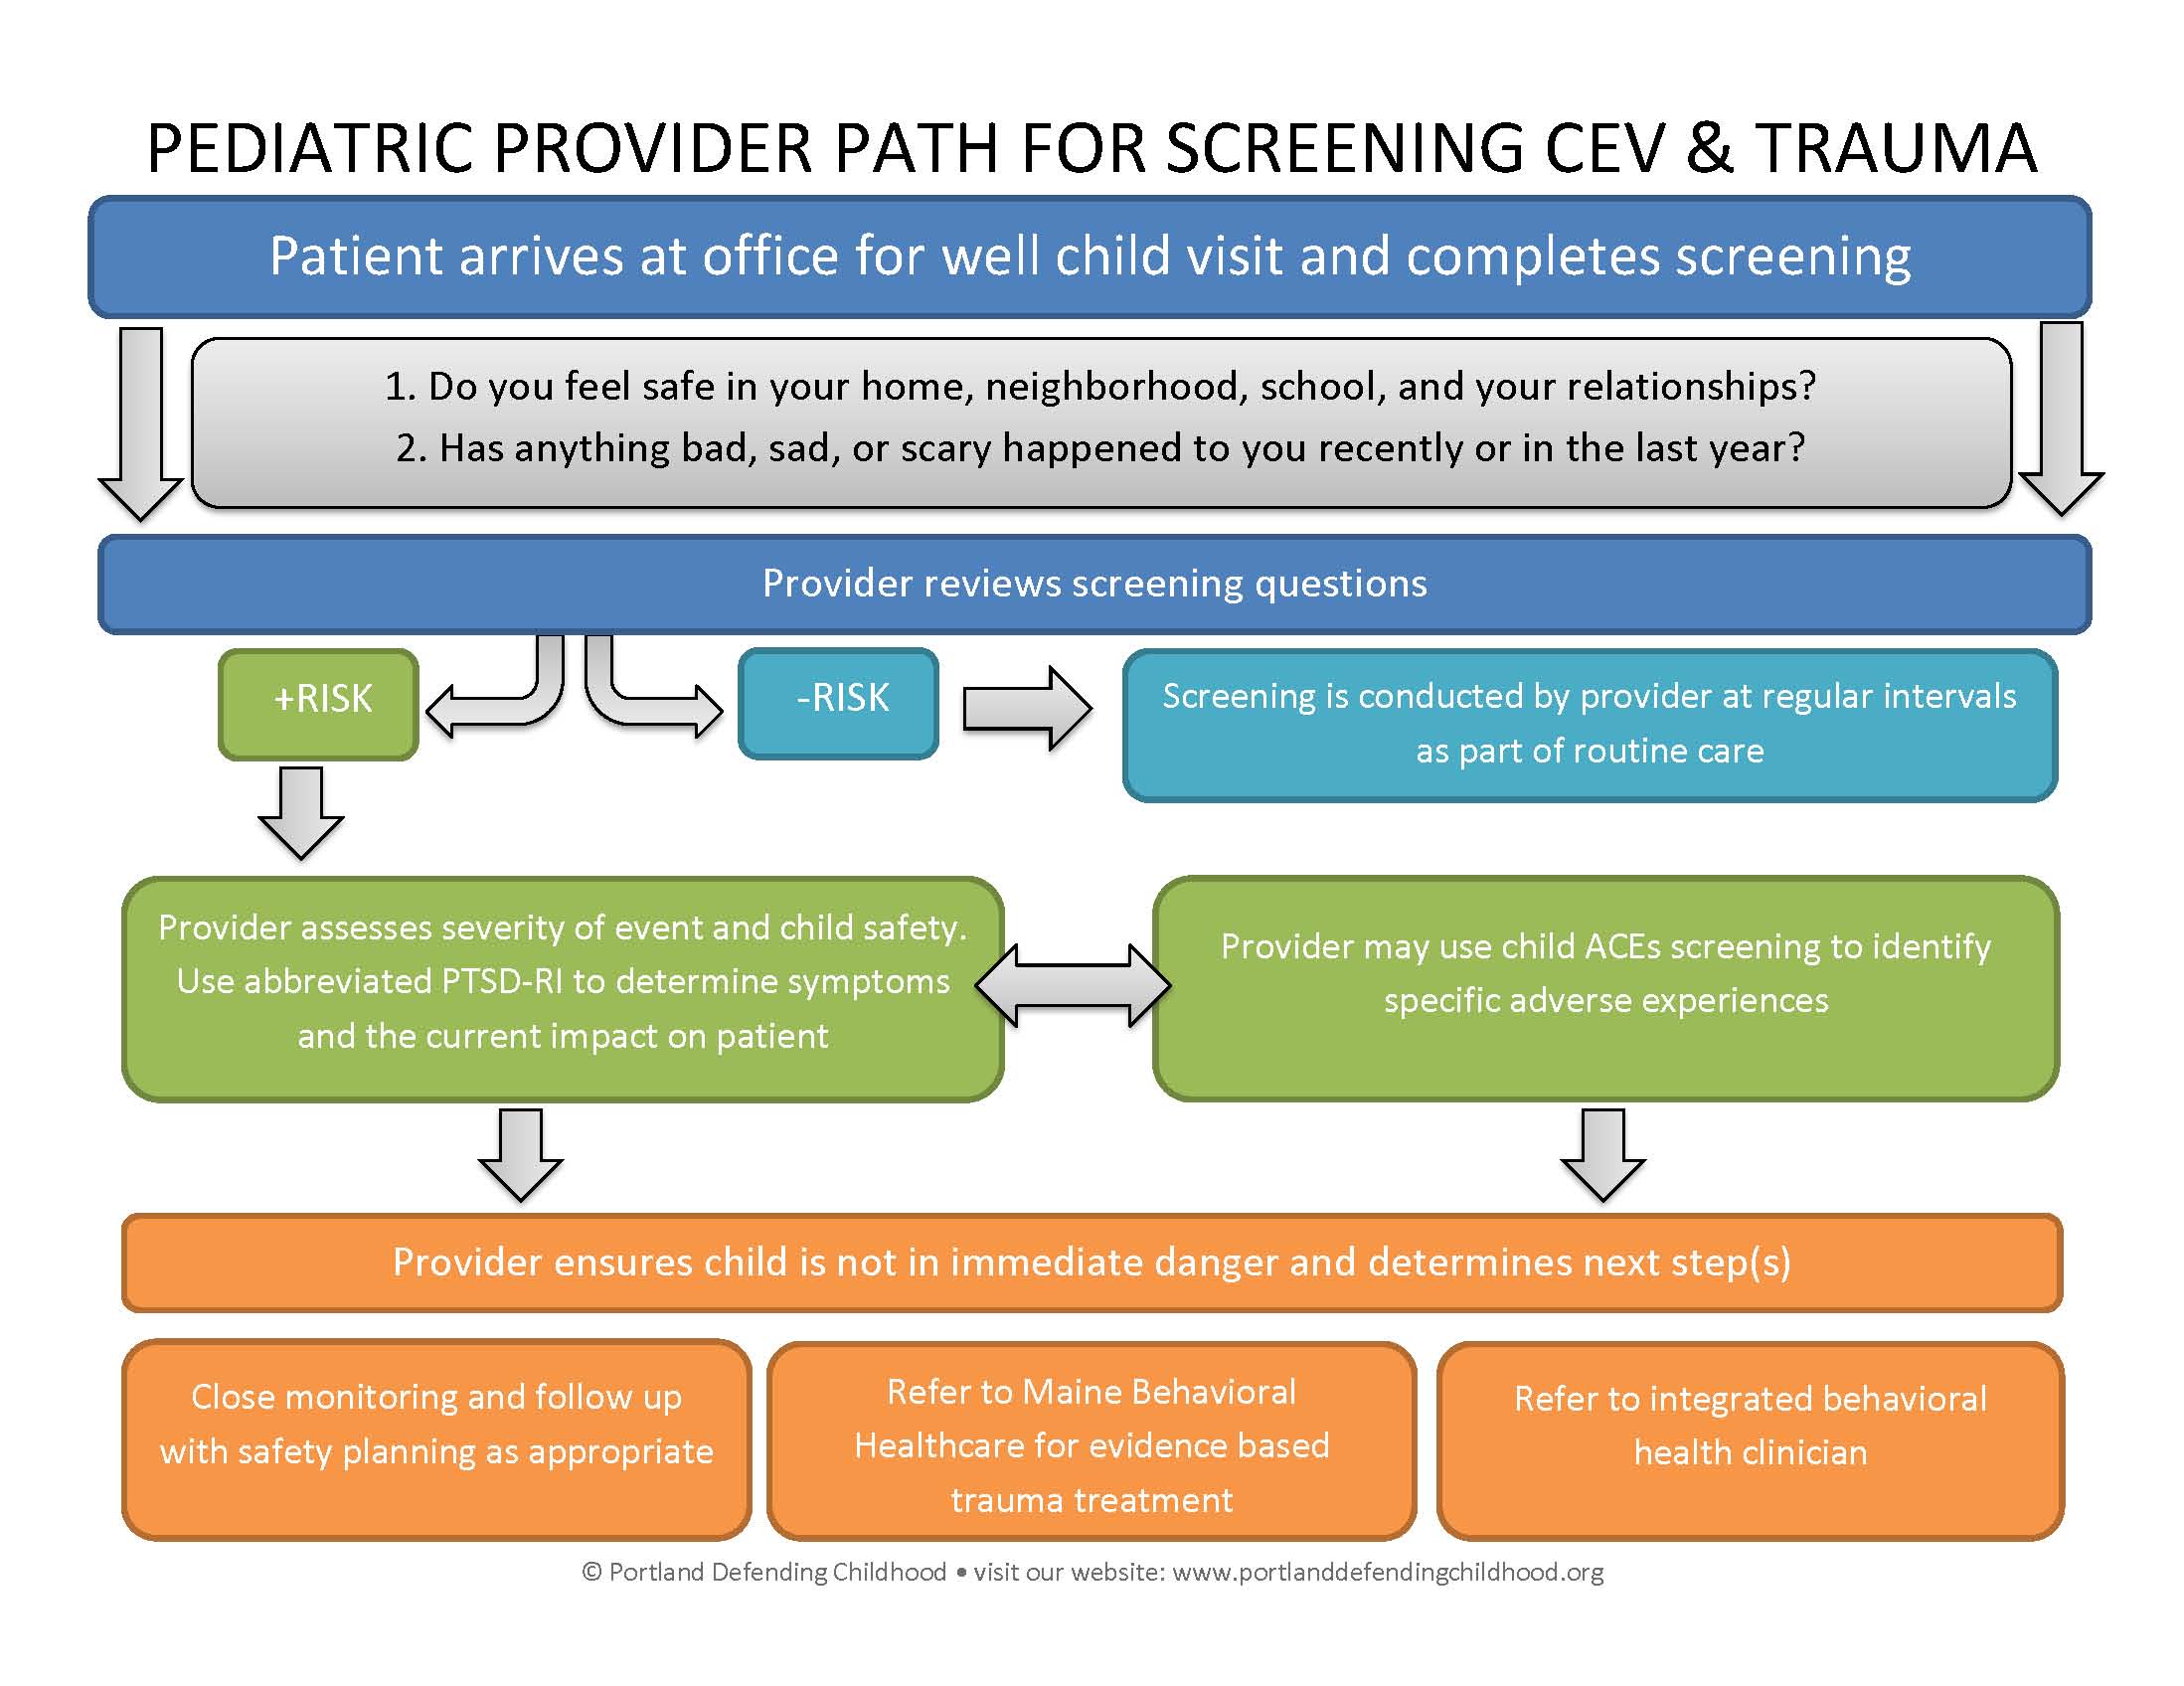 Pediatric provider path for screening CEV and trauma